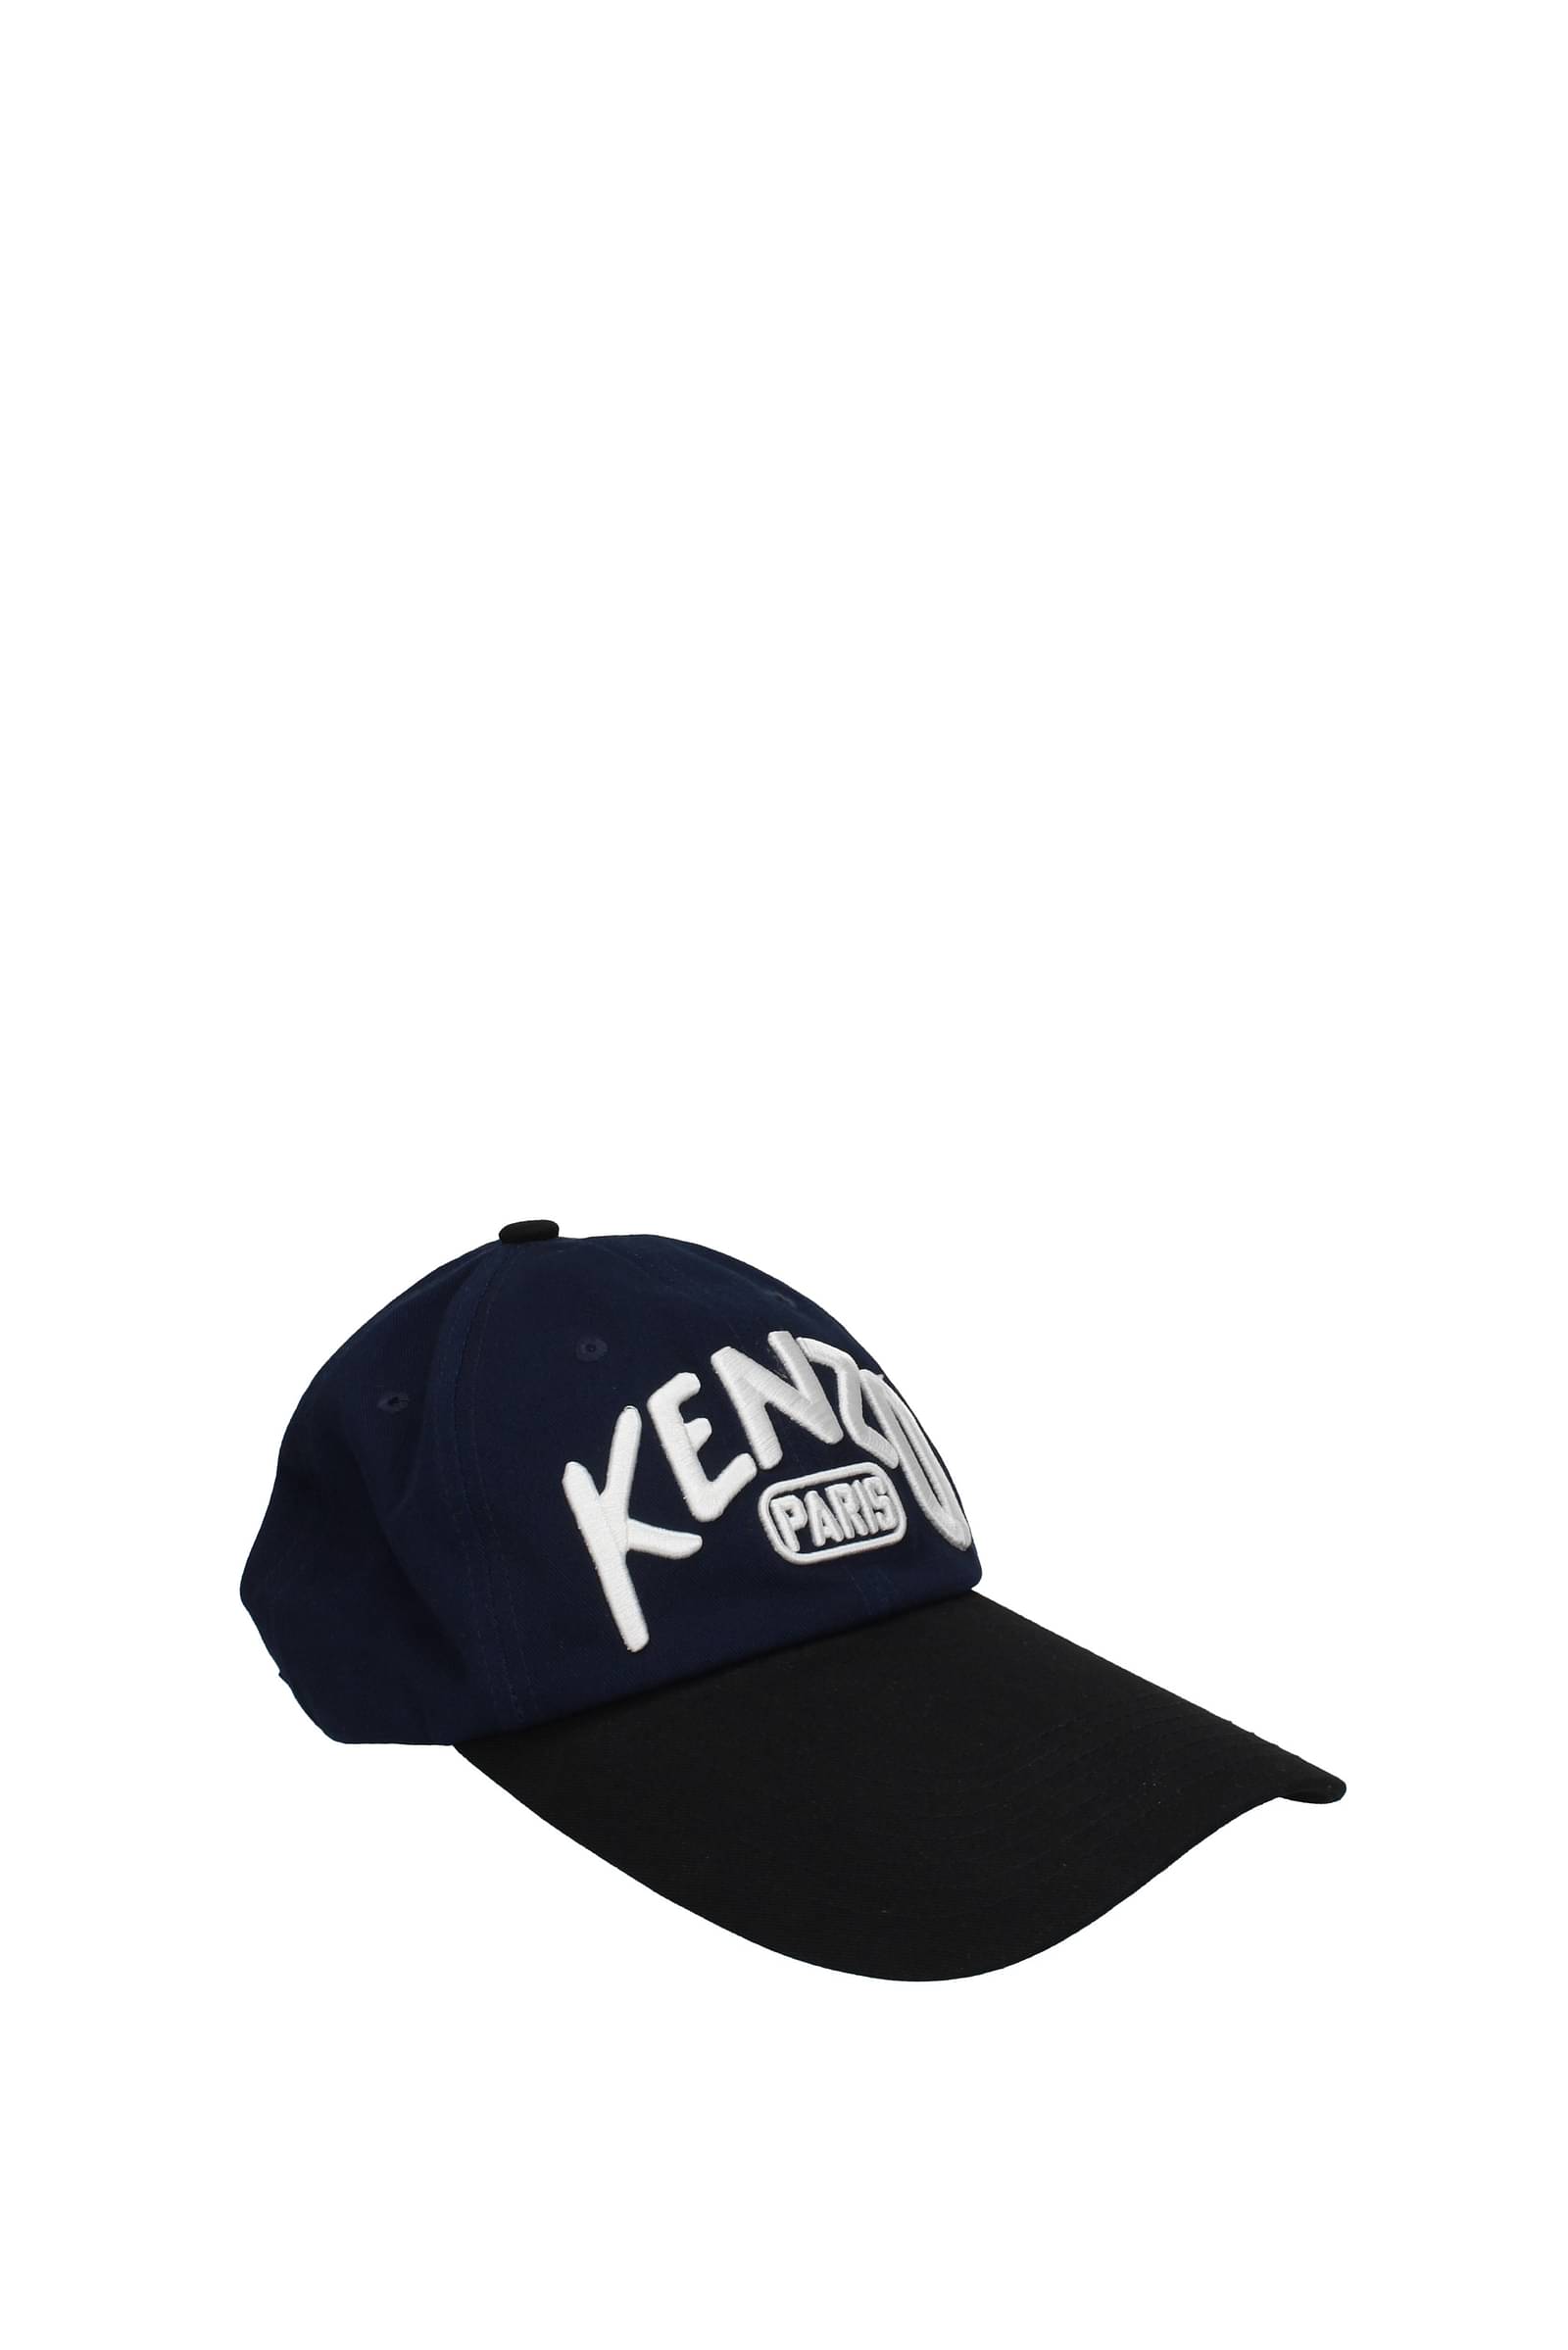 Kenzo 帽子男士PFD55AC891F4176 棉花蓝色黑色79,8€